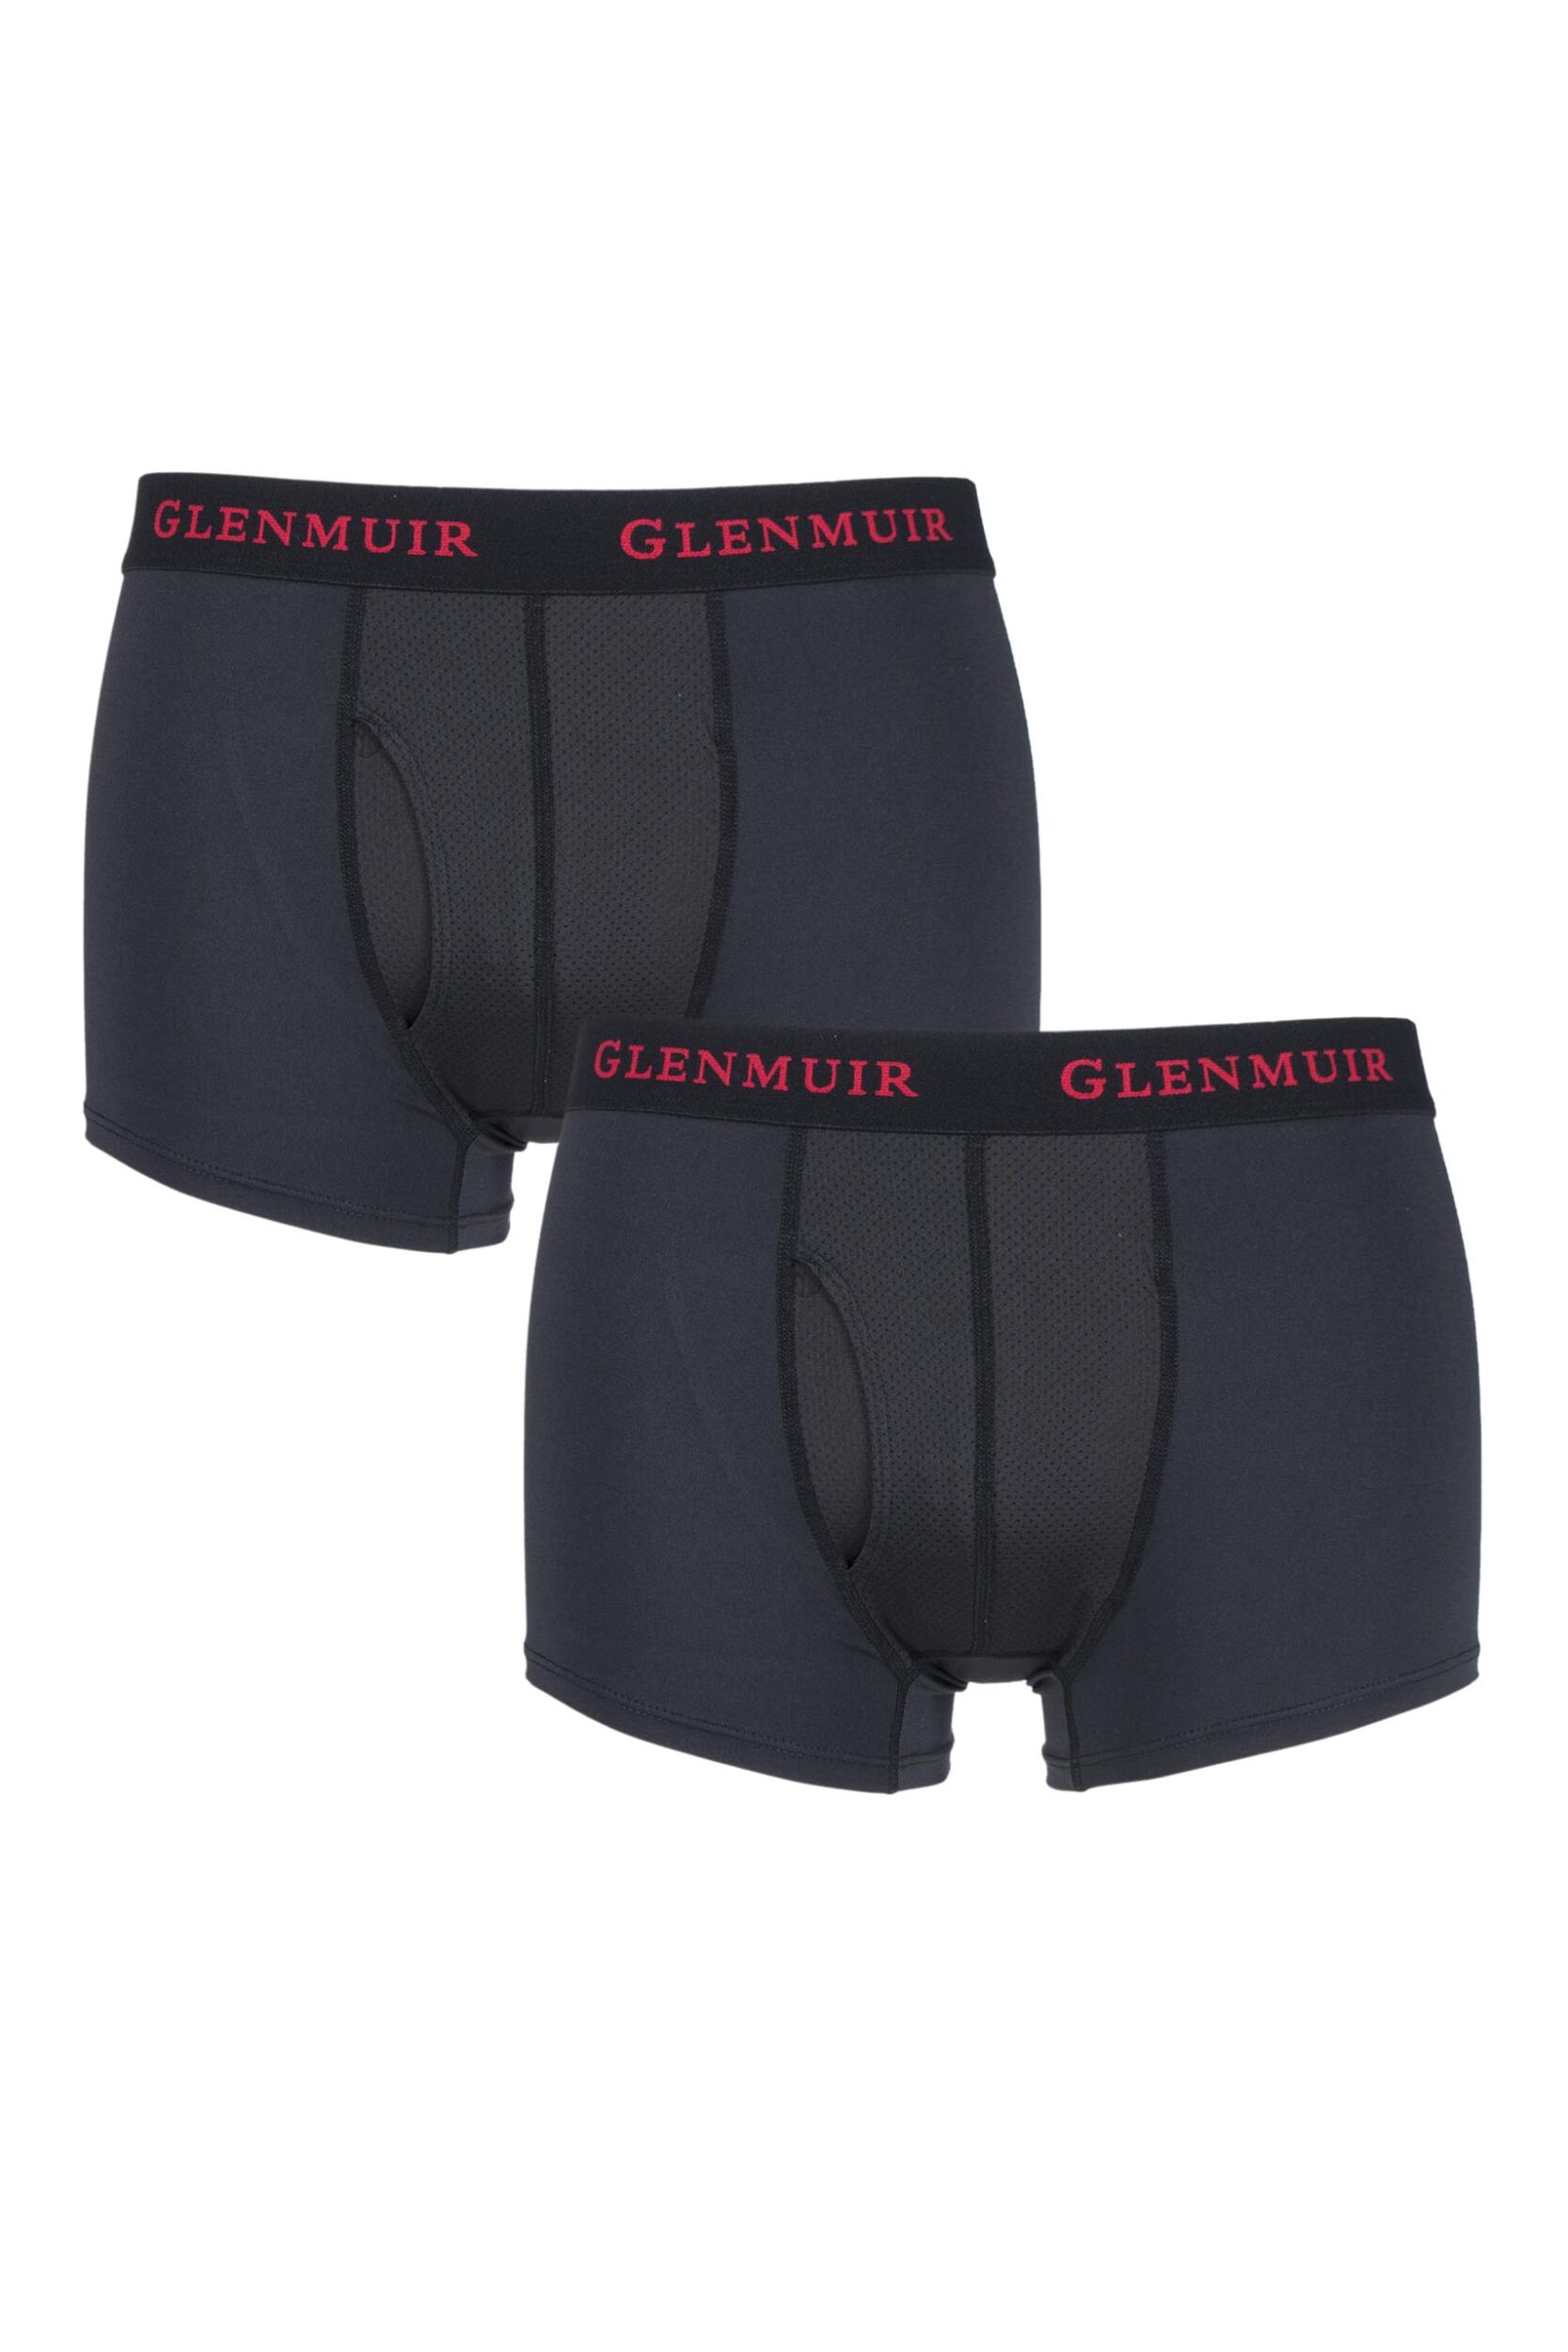 2 Pair Black / Red Performance Underwear 3-Inch Leg Men's Small - Glenmuir  - Black - Size: Small